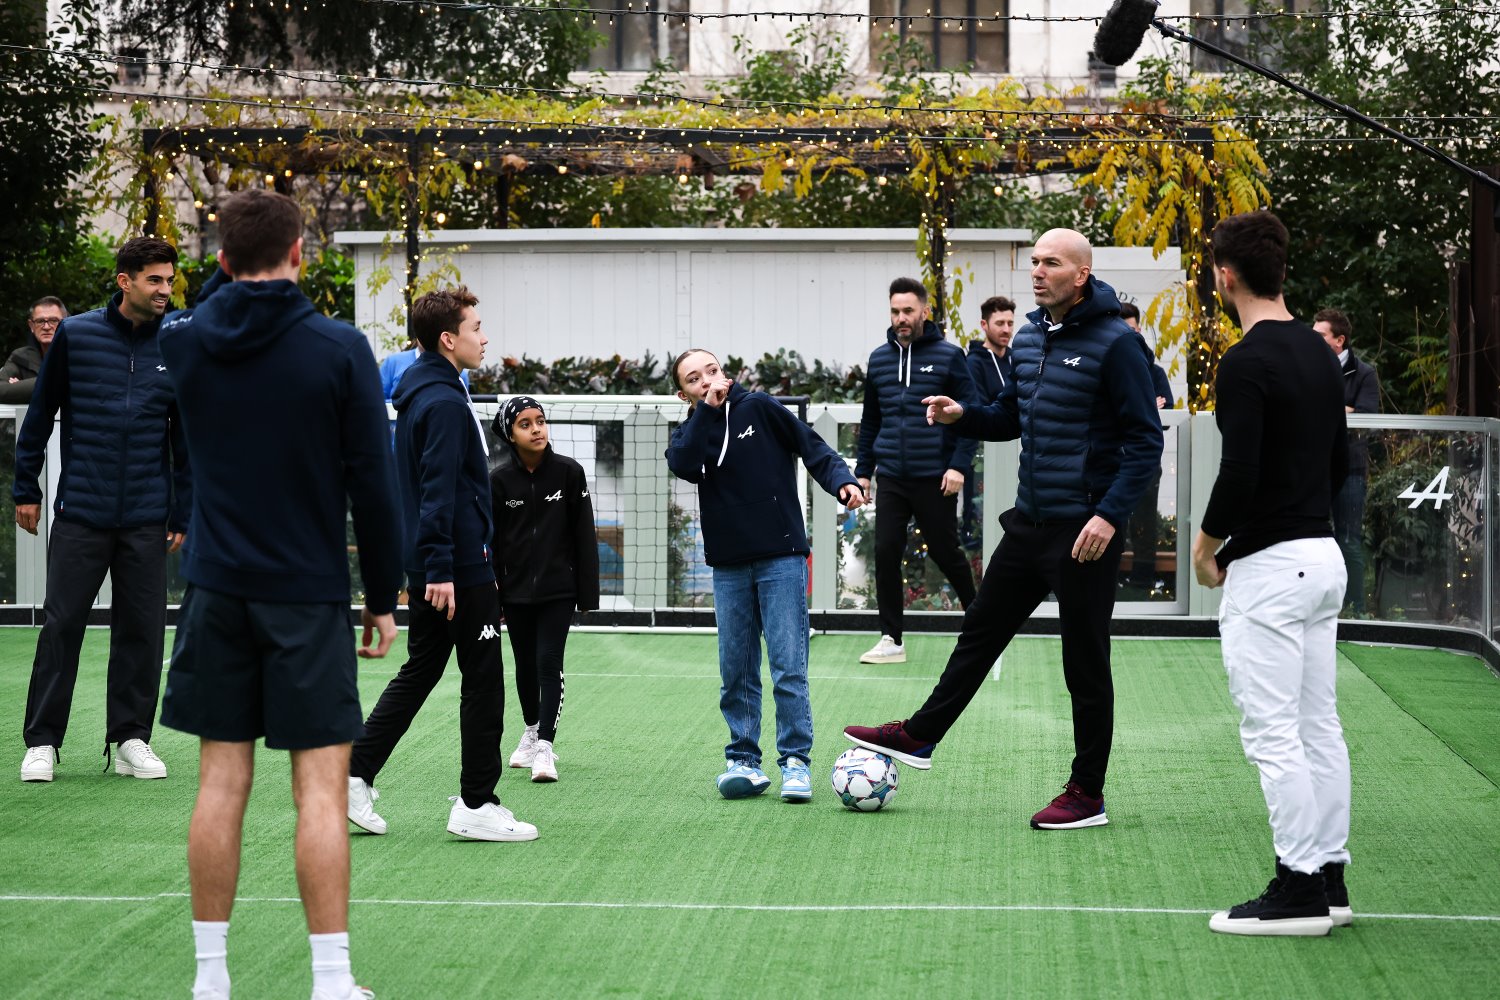 Zinedine Zidane, the legendary French footballer and Alpine ambassadorgives soccer lessons